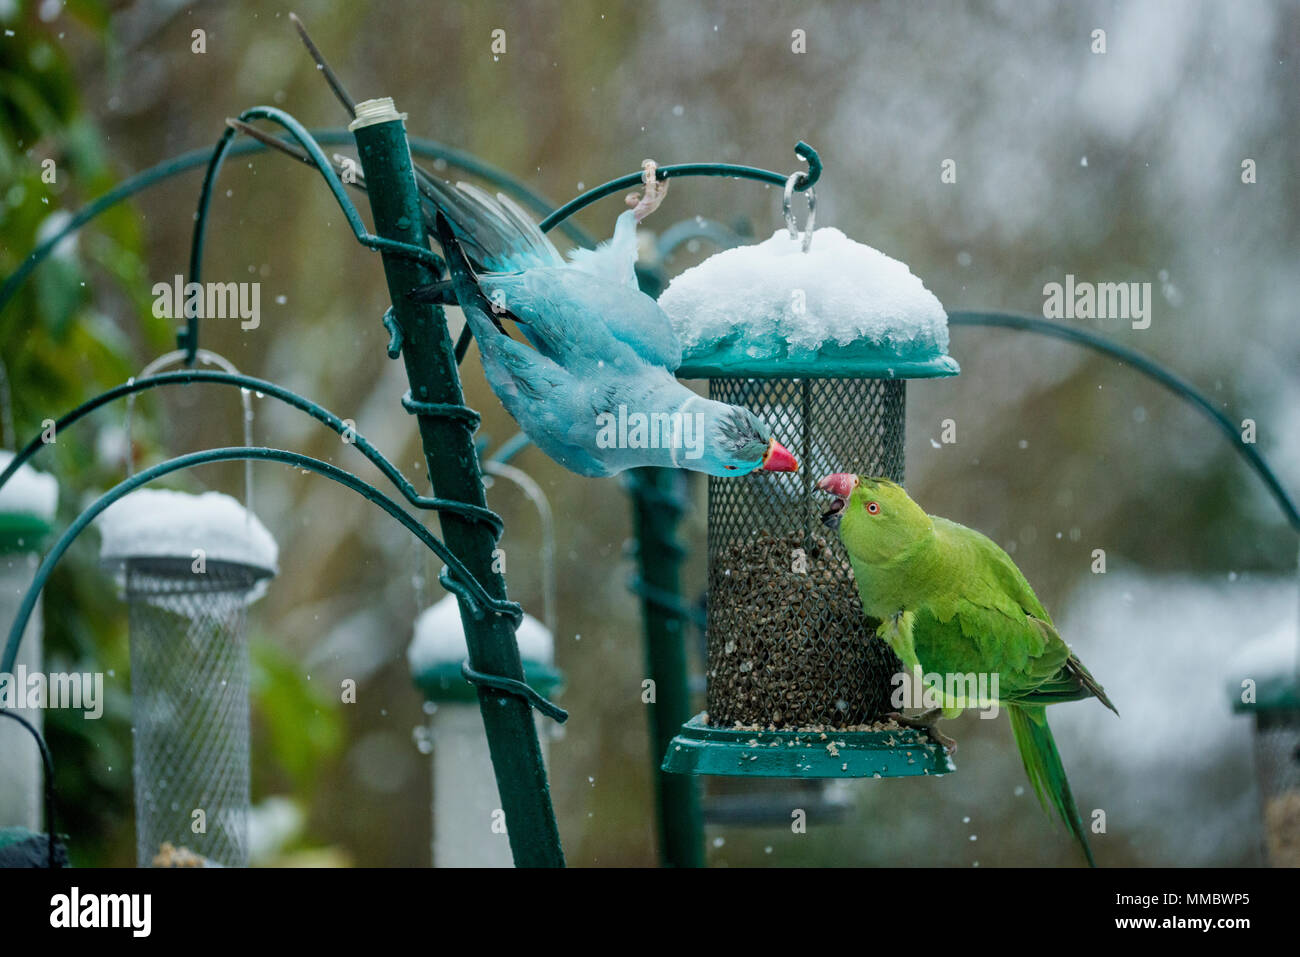 Rose-ringed or ring-necked parakeets (Psittacula krameri), blue mutation on bird feeder in garden with snow.  London, UK.  The blue bird is ringed, po Stock Photo